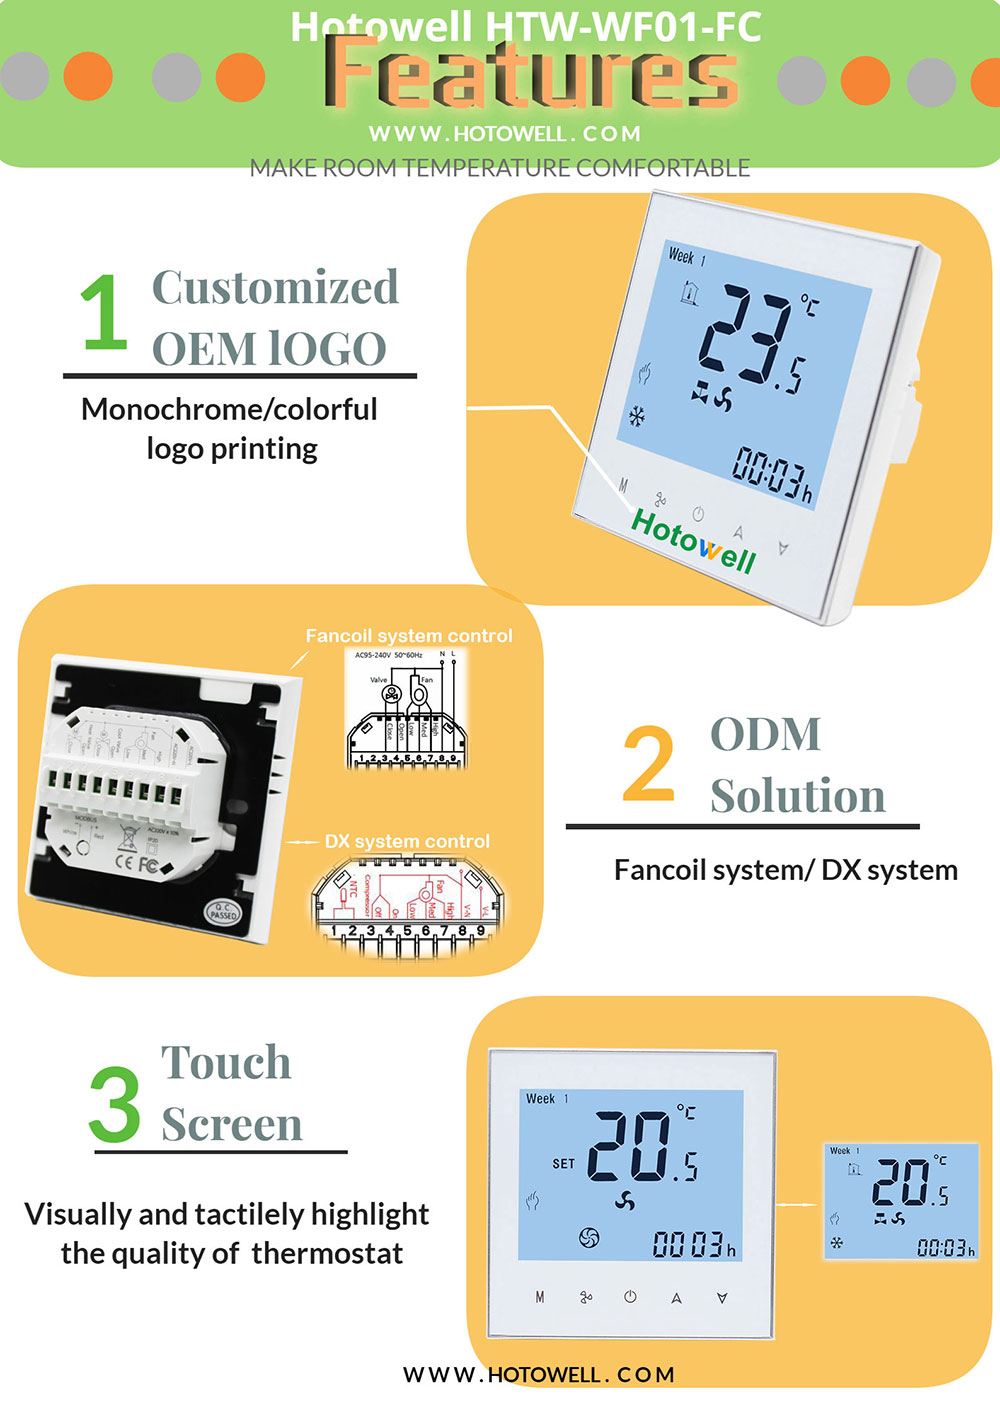 Customized FCU thermostats